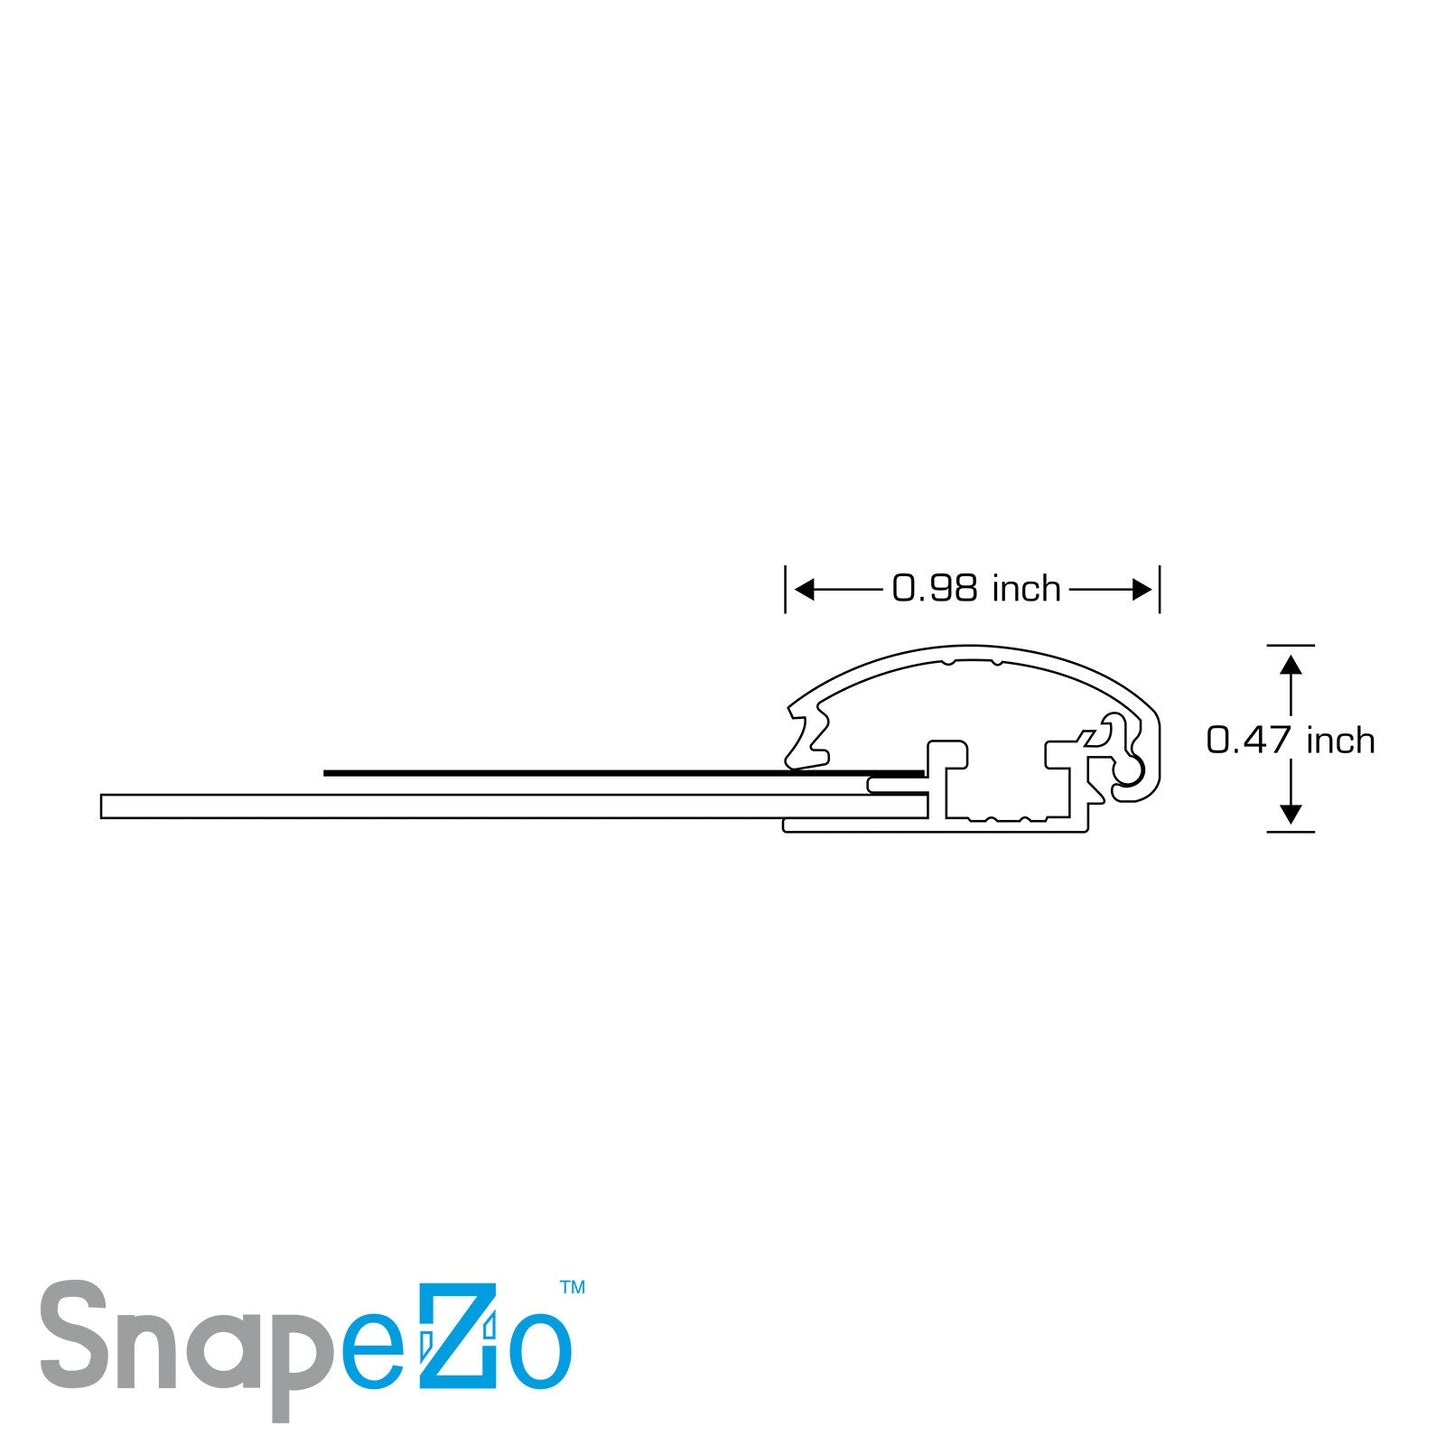 20x36 Silver SnapeZo® Snap Frame - 1" Profile